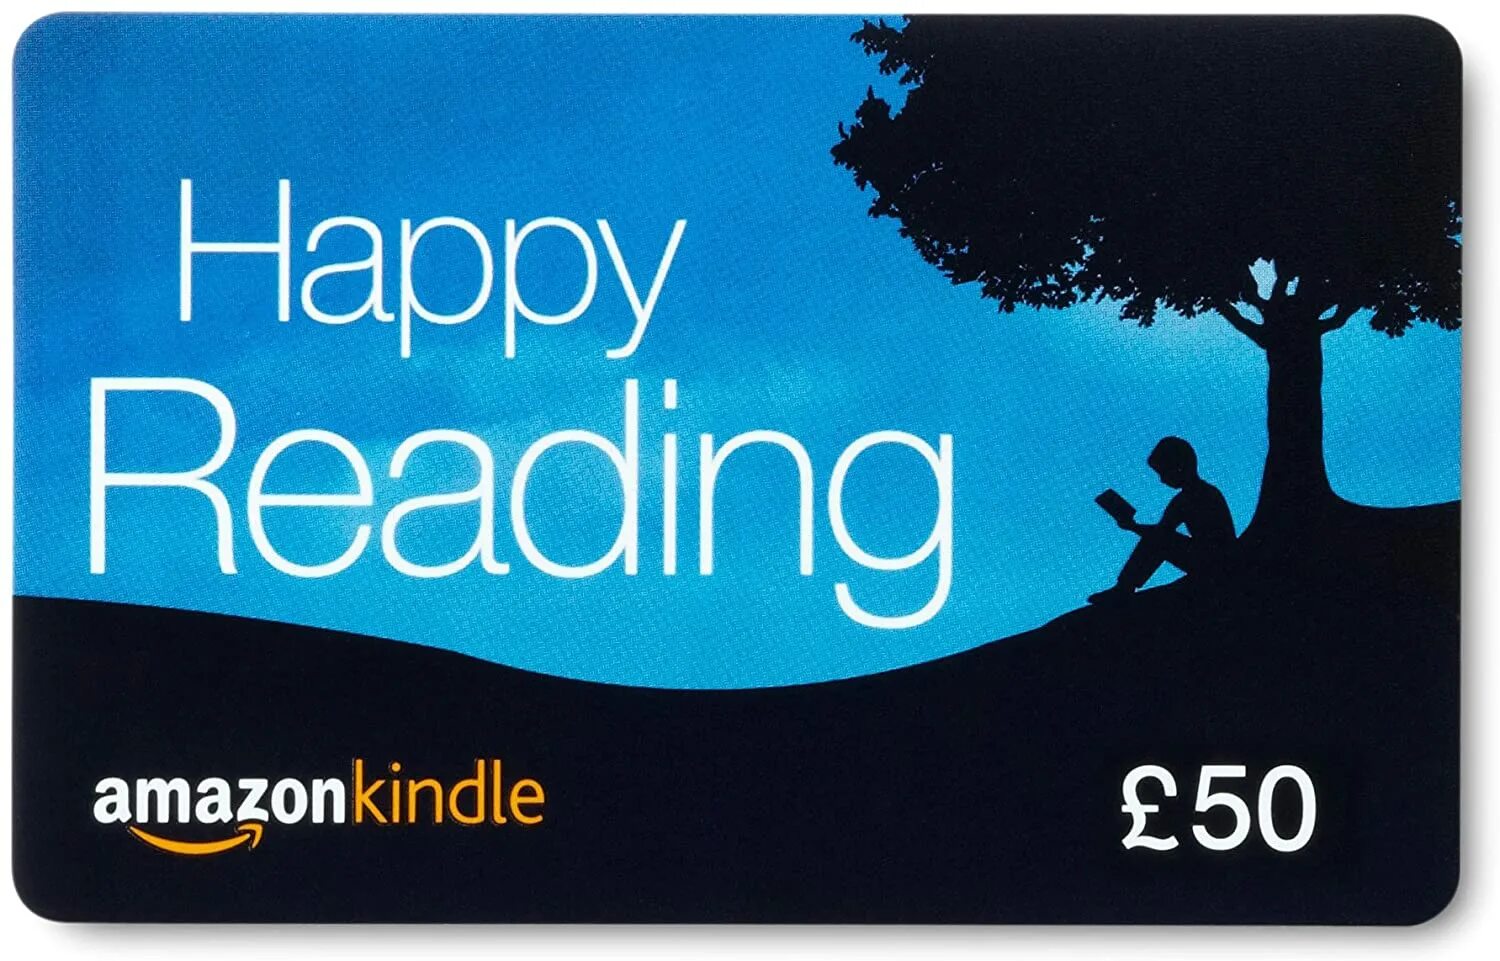 Amazon Kindle app Greetings. Happy reading. Happy Reader. Amazon reading